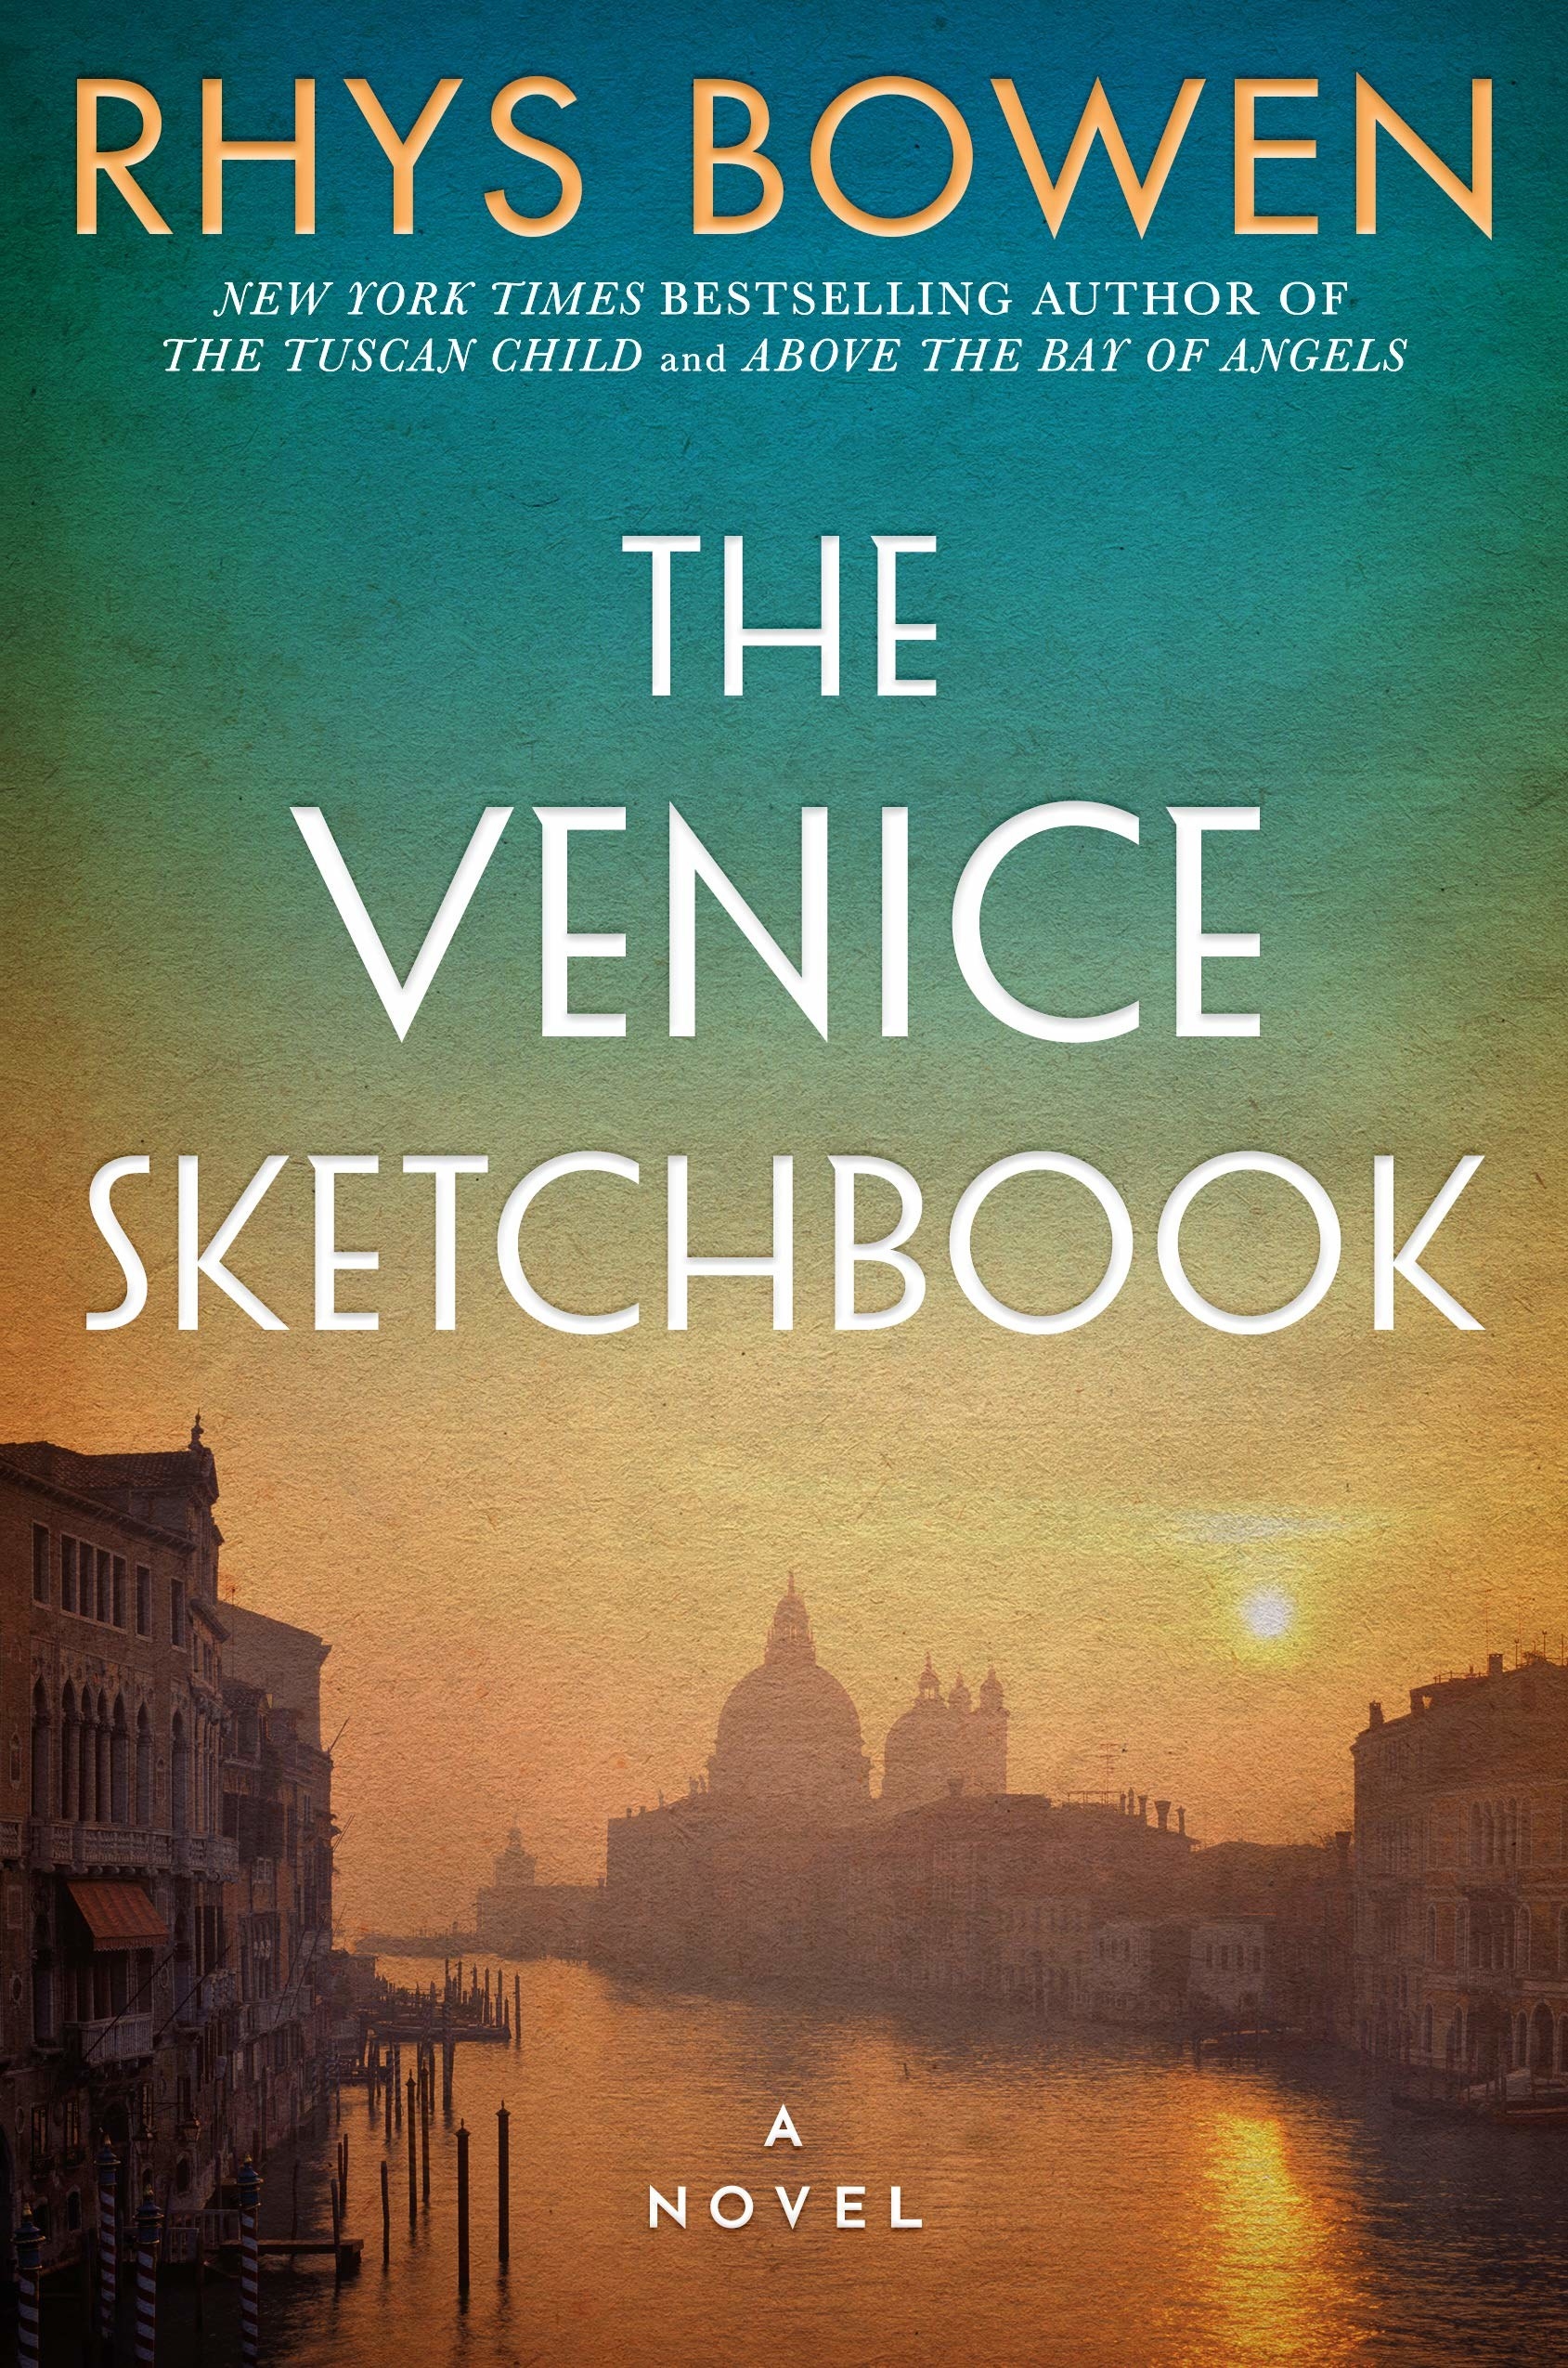 Book: The Venice Sketchbook by Rhys Bowen